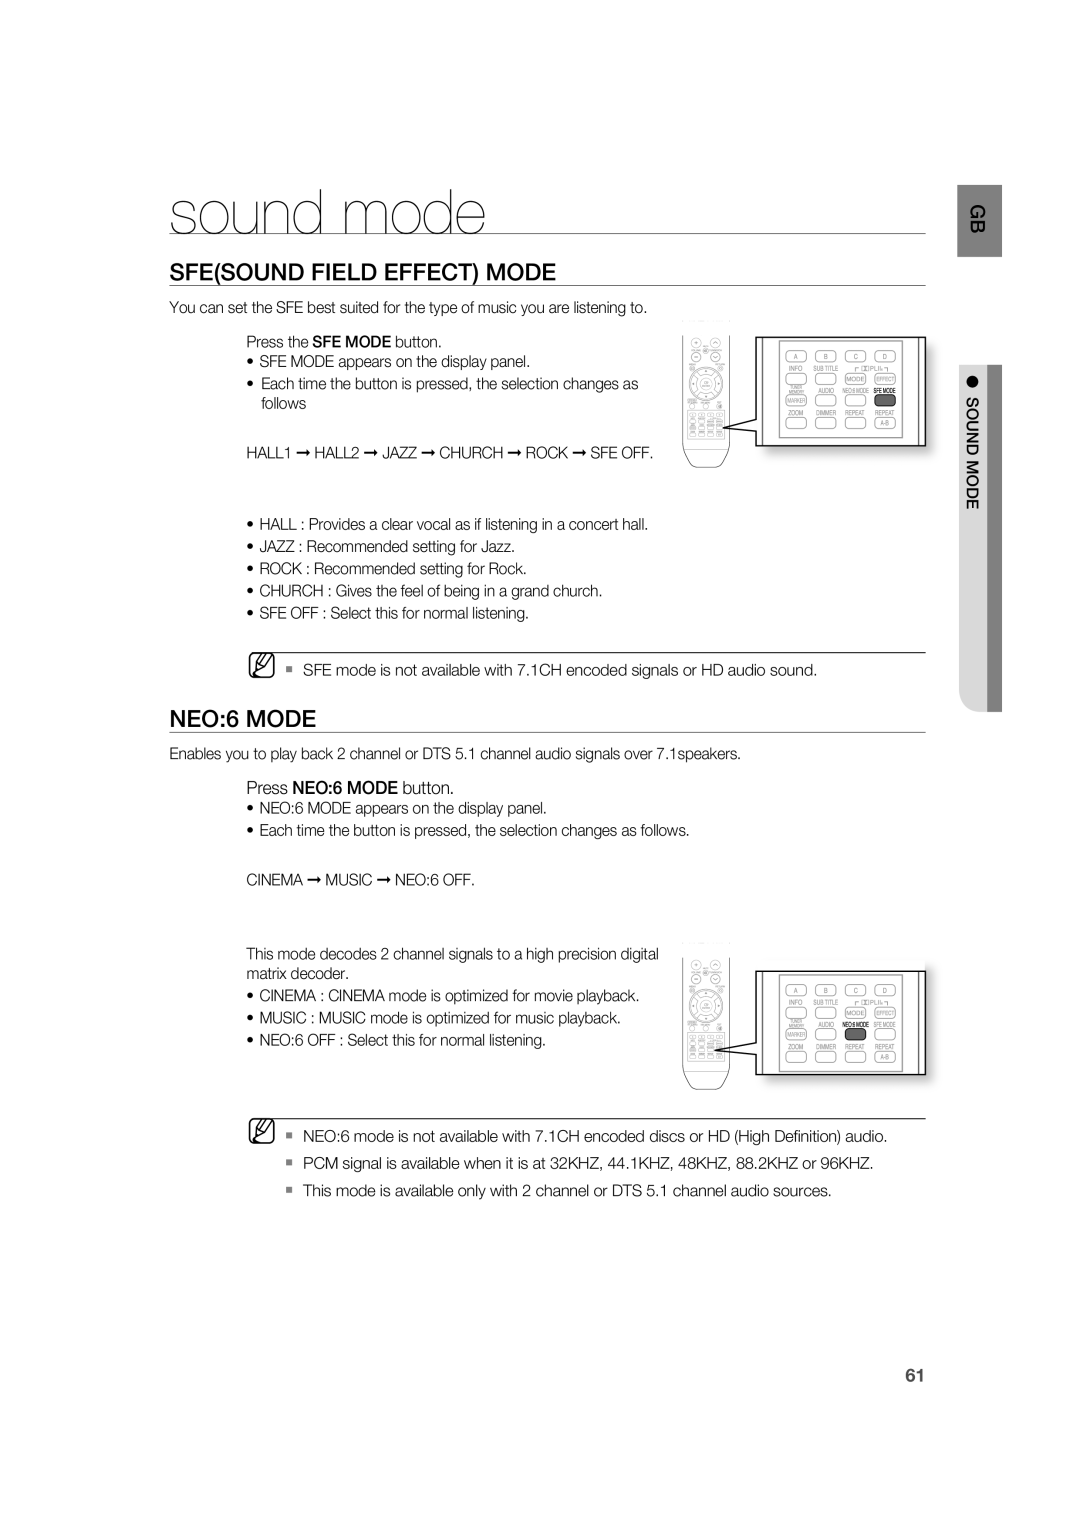 Samsung AH68-02019K manual sound mode, Sfesound Field Effect Mode, NEO:6 MODE 